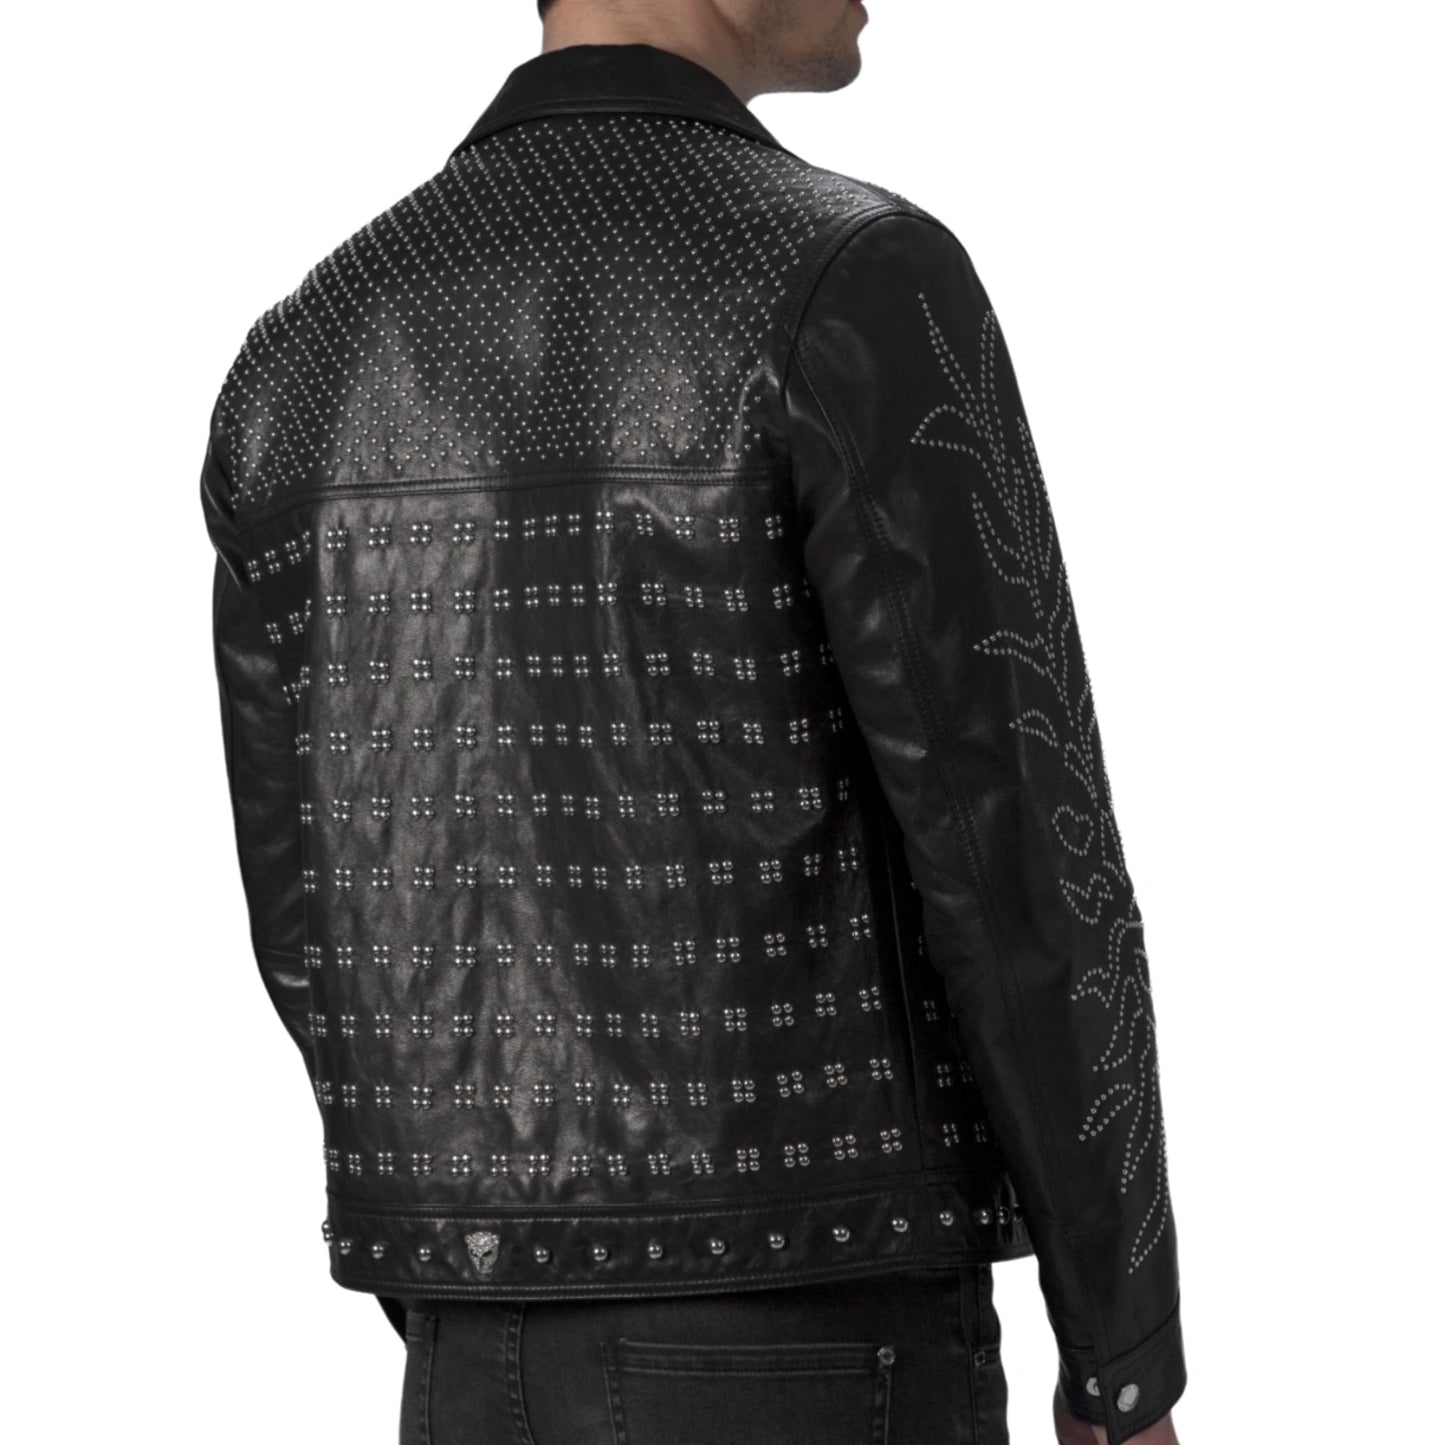 Black Studded Leather Motorcycle Jacket Punk Biker Jacket